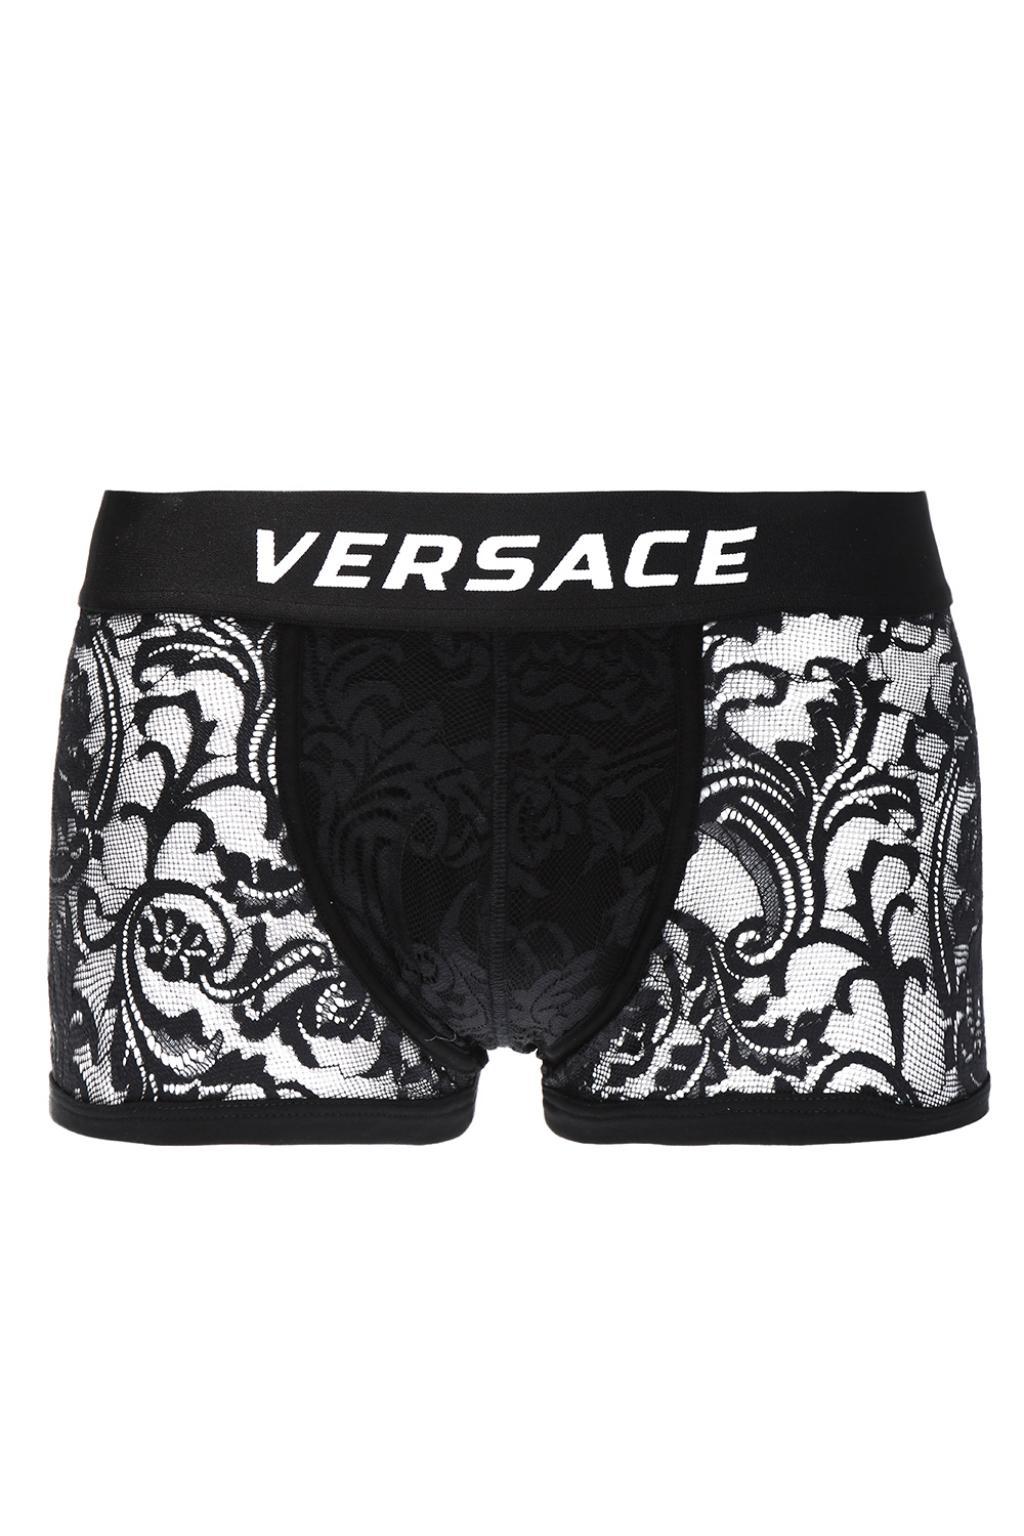 versace lace boxers